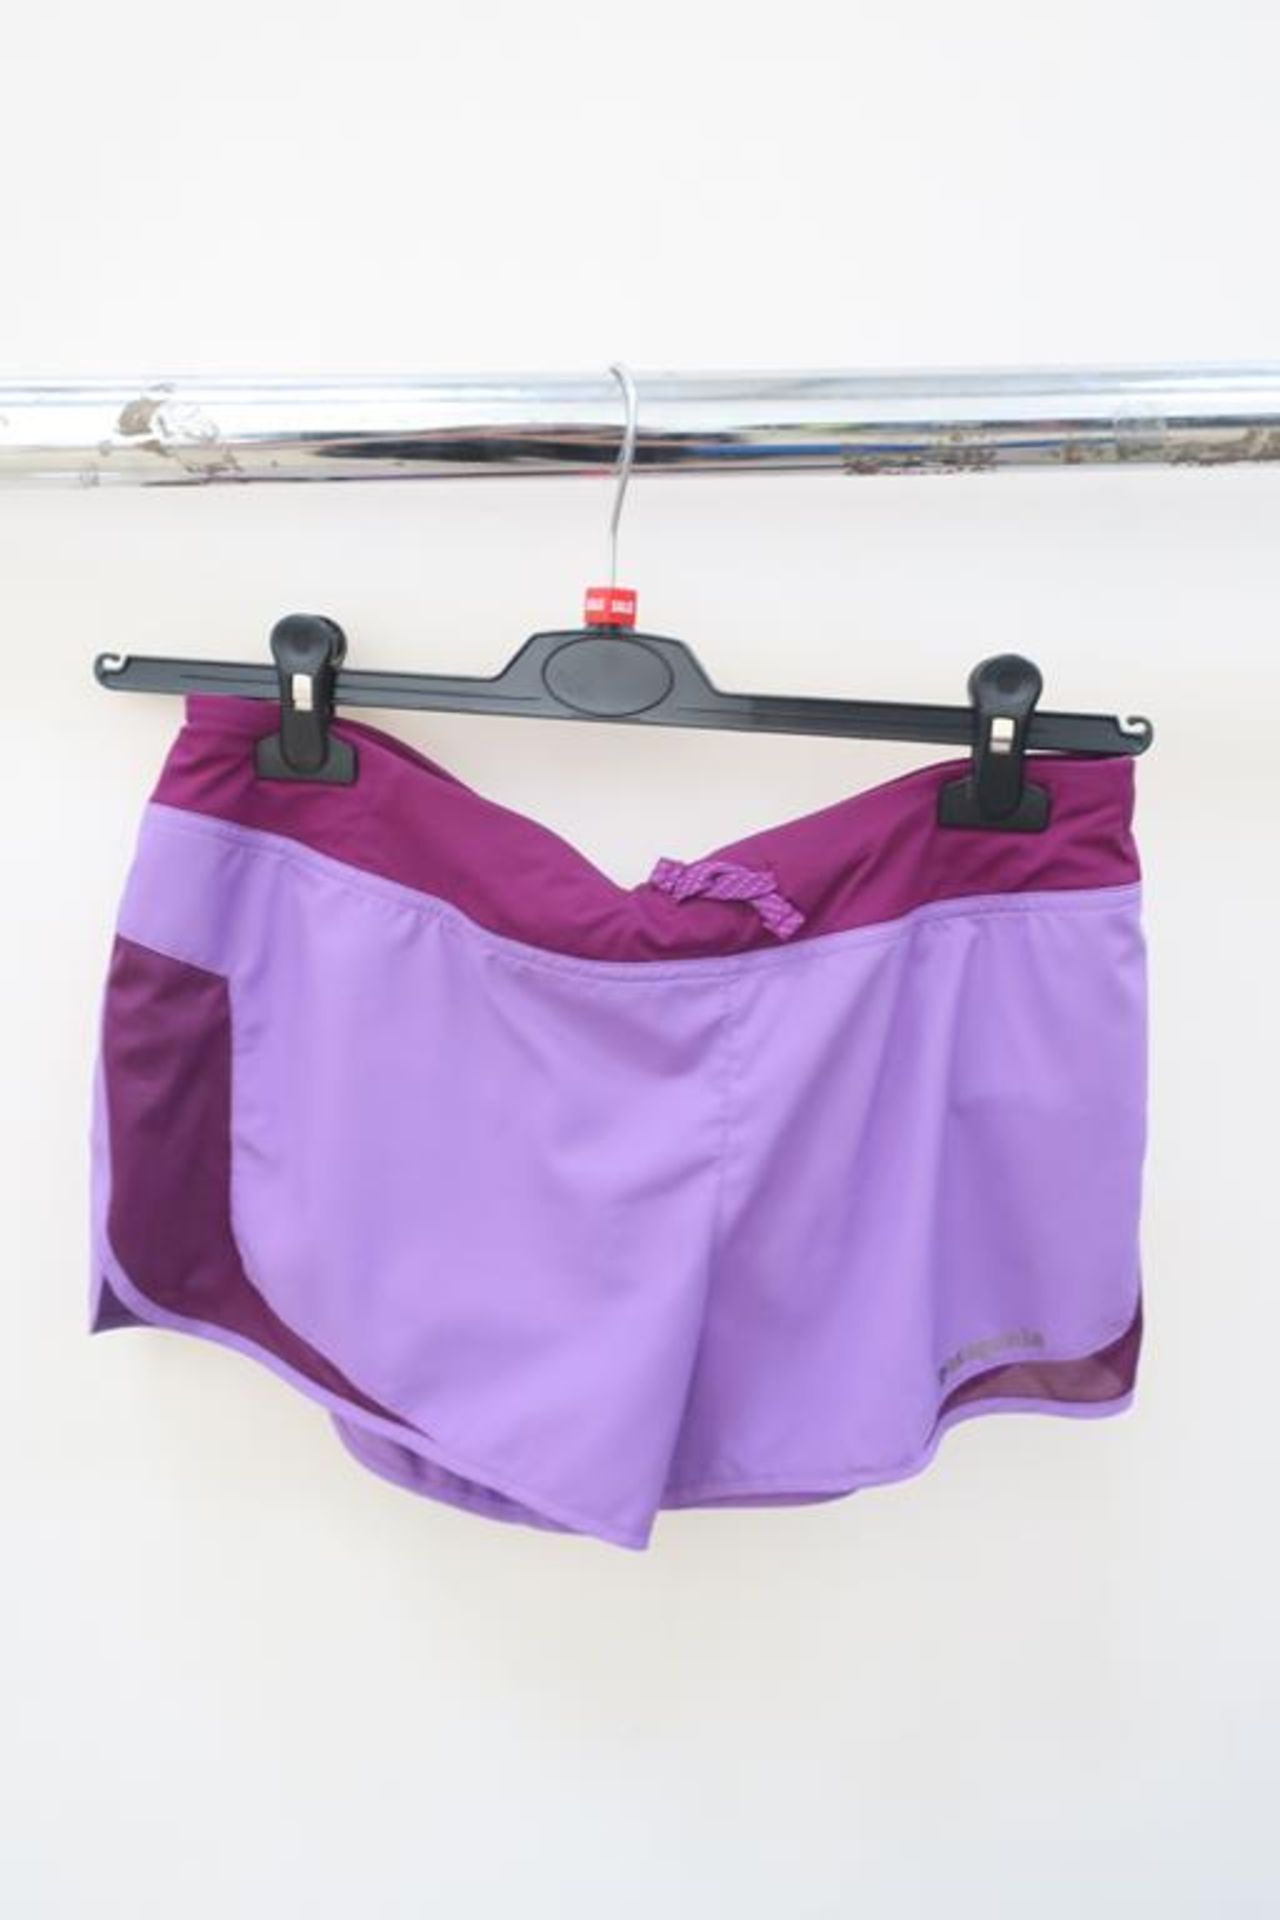 Patagonia Womens Strider Shorts, Gore R5 Womens Light Shorts, Saloman Womens Agile Shorts - Image 4 of 4